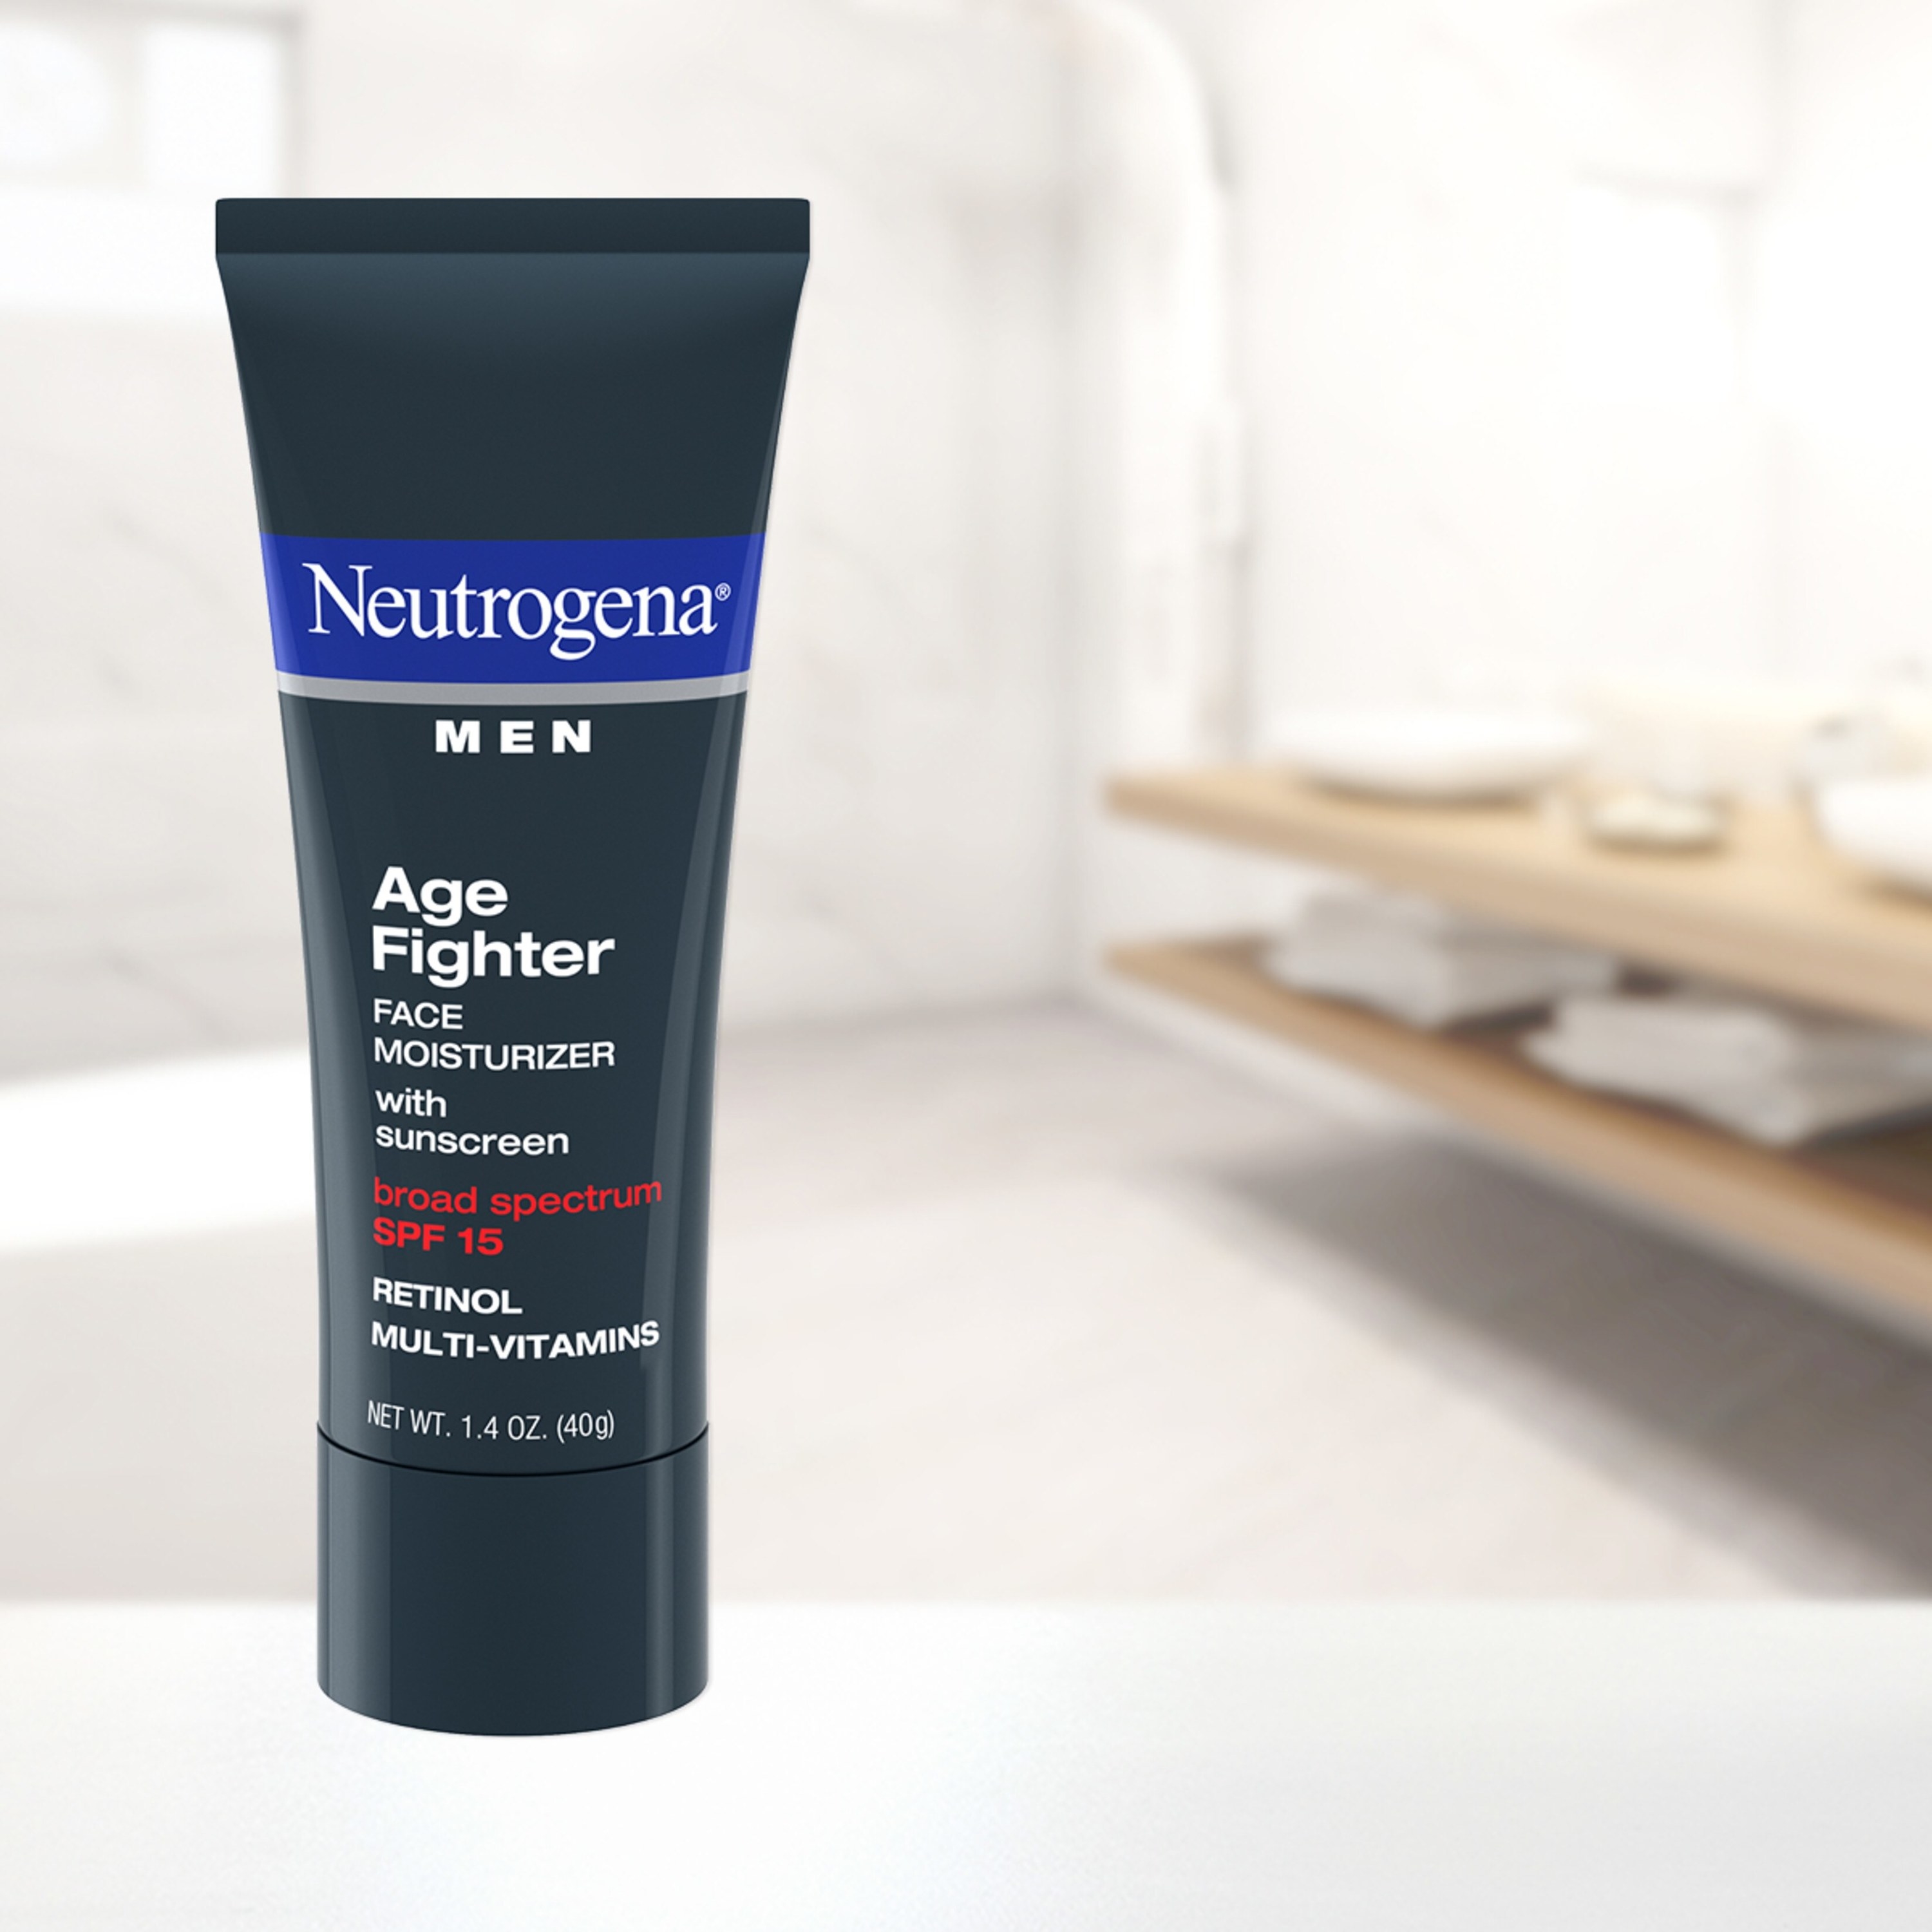 Neutrogena face moisturizer with sunscreen